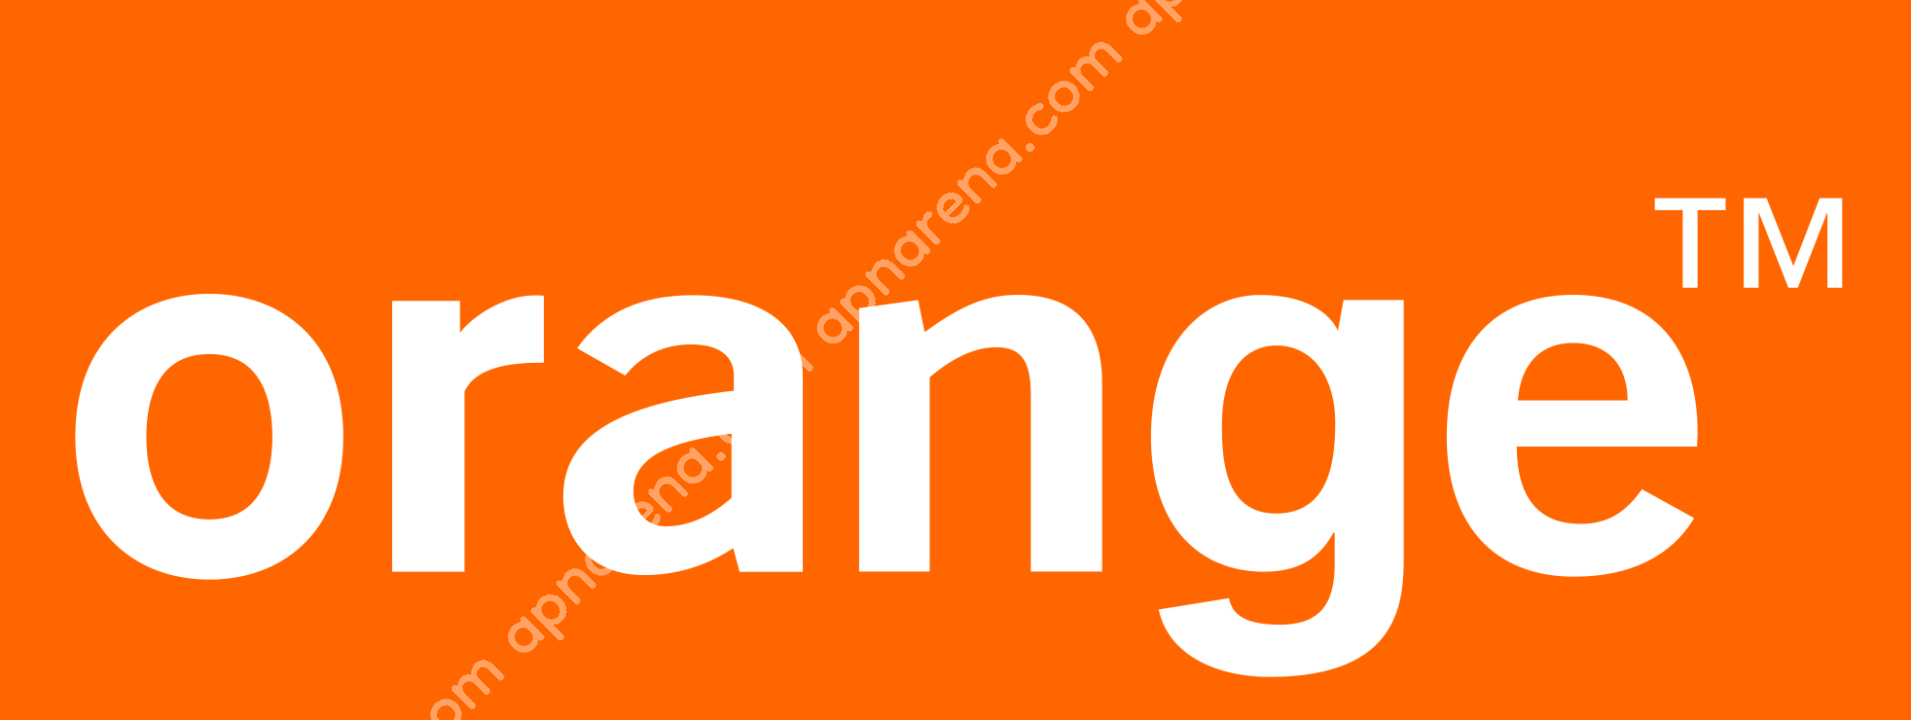 Orange Sierra Leone APN Internet Settings Android iPhone